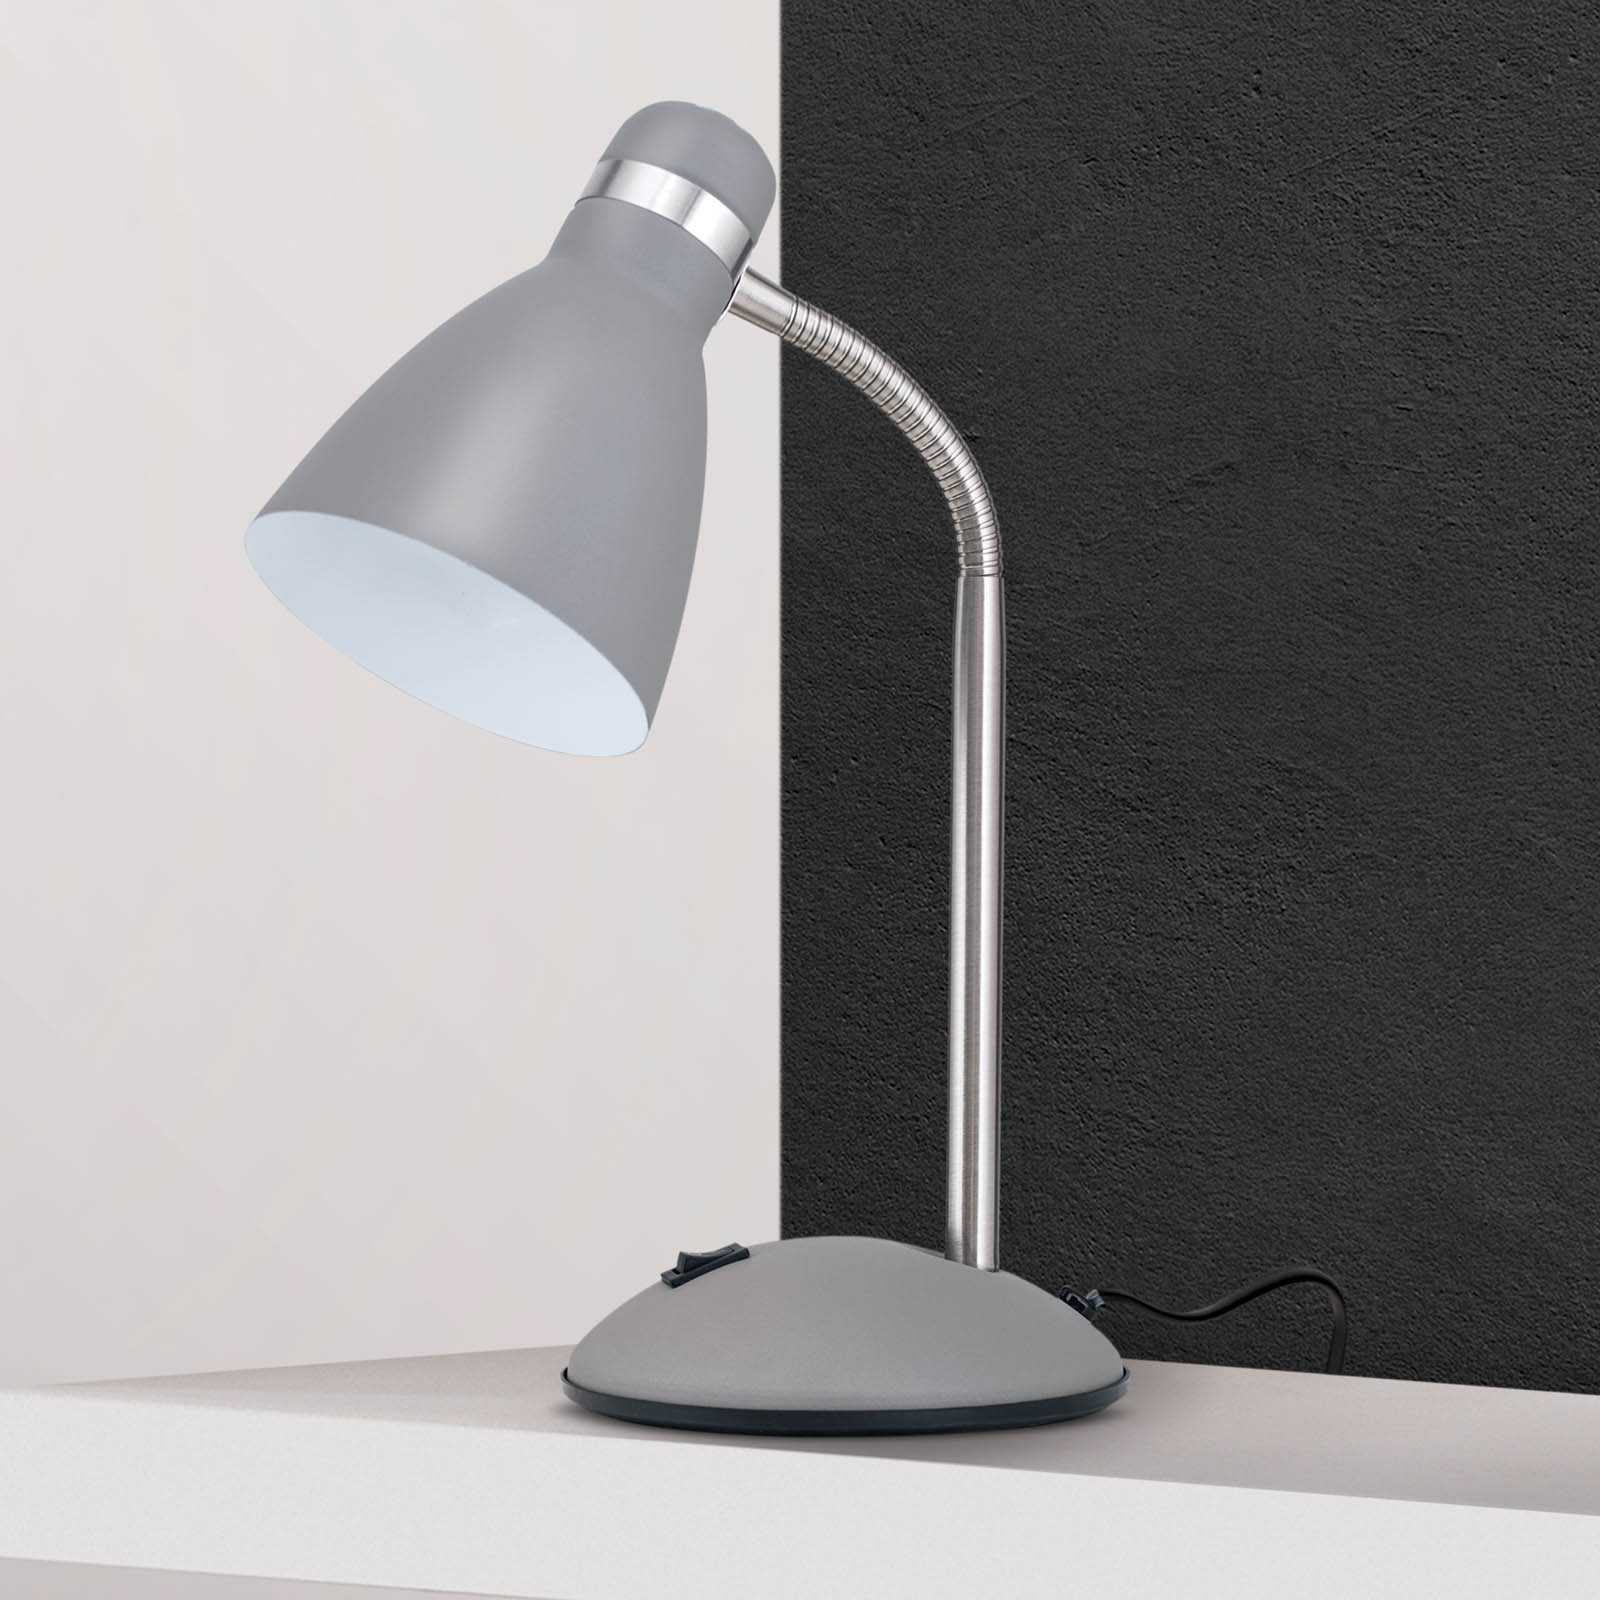 School desk lamp, grey